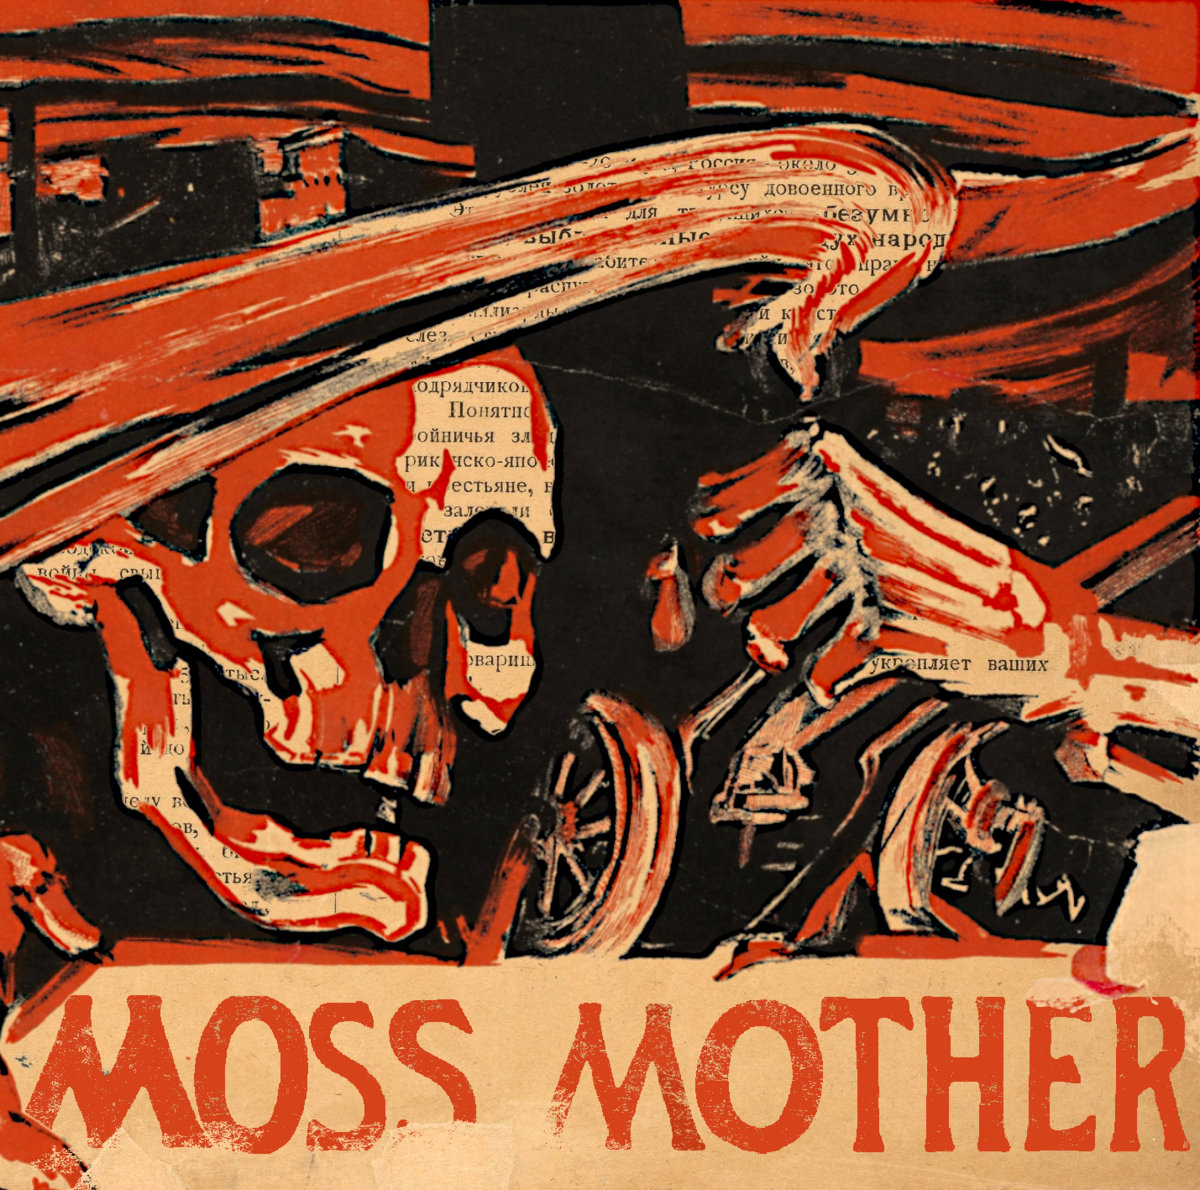 Moss Mother - "Moss Mother" EP - 2023